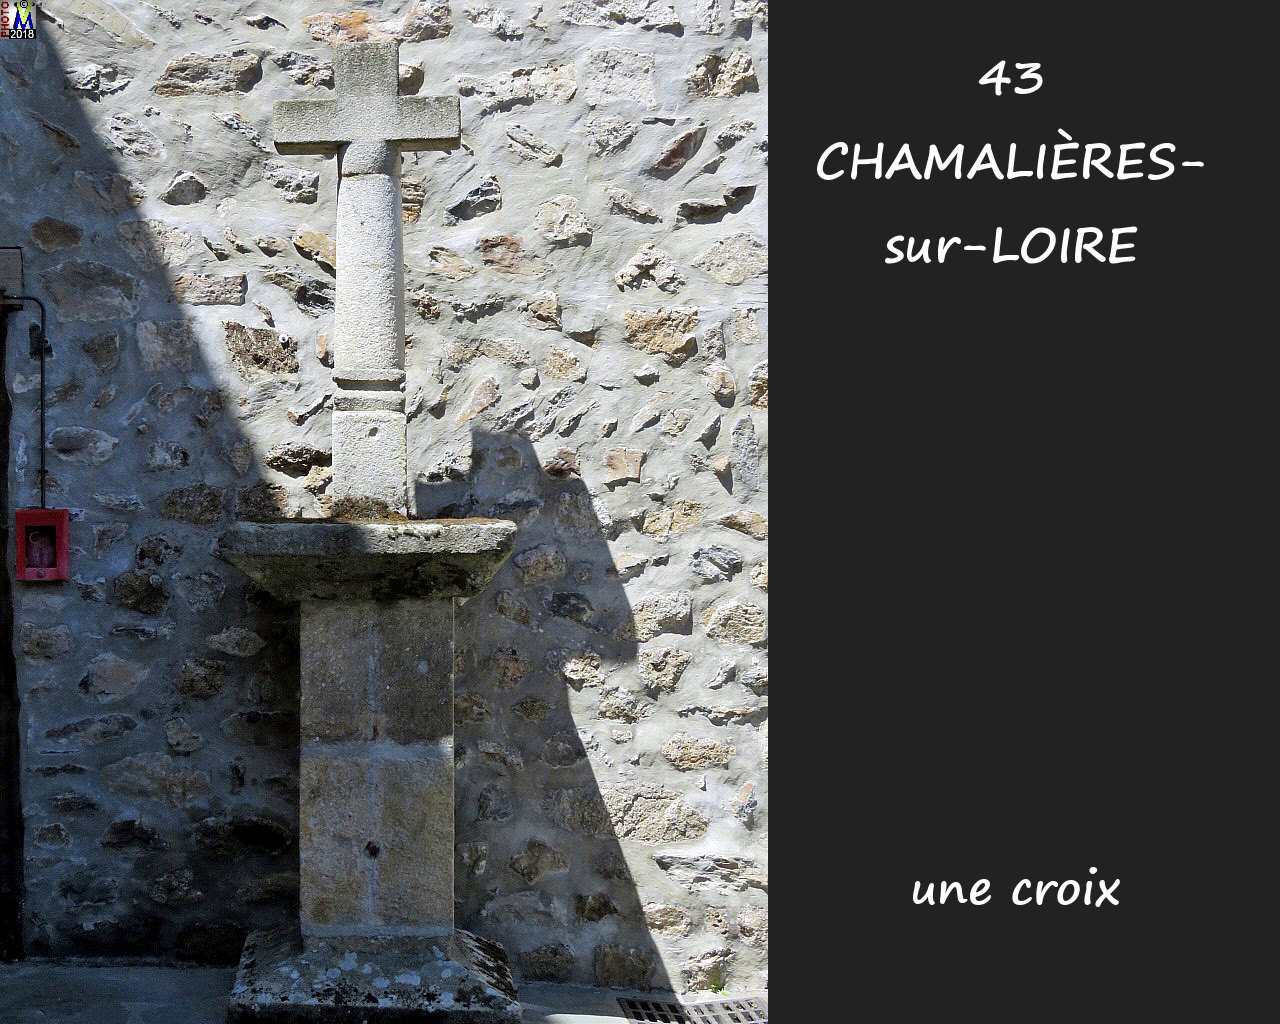 43CHAMALIERES-LOIRE_croix_110.jpg